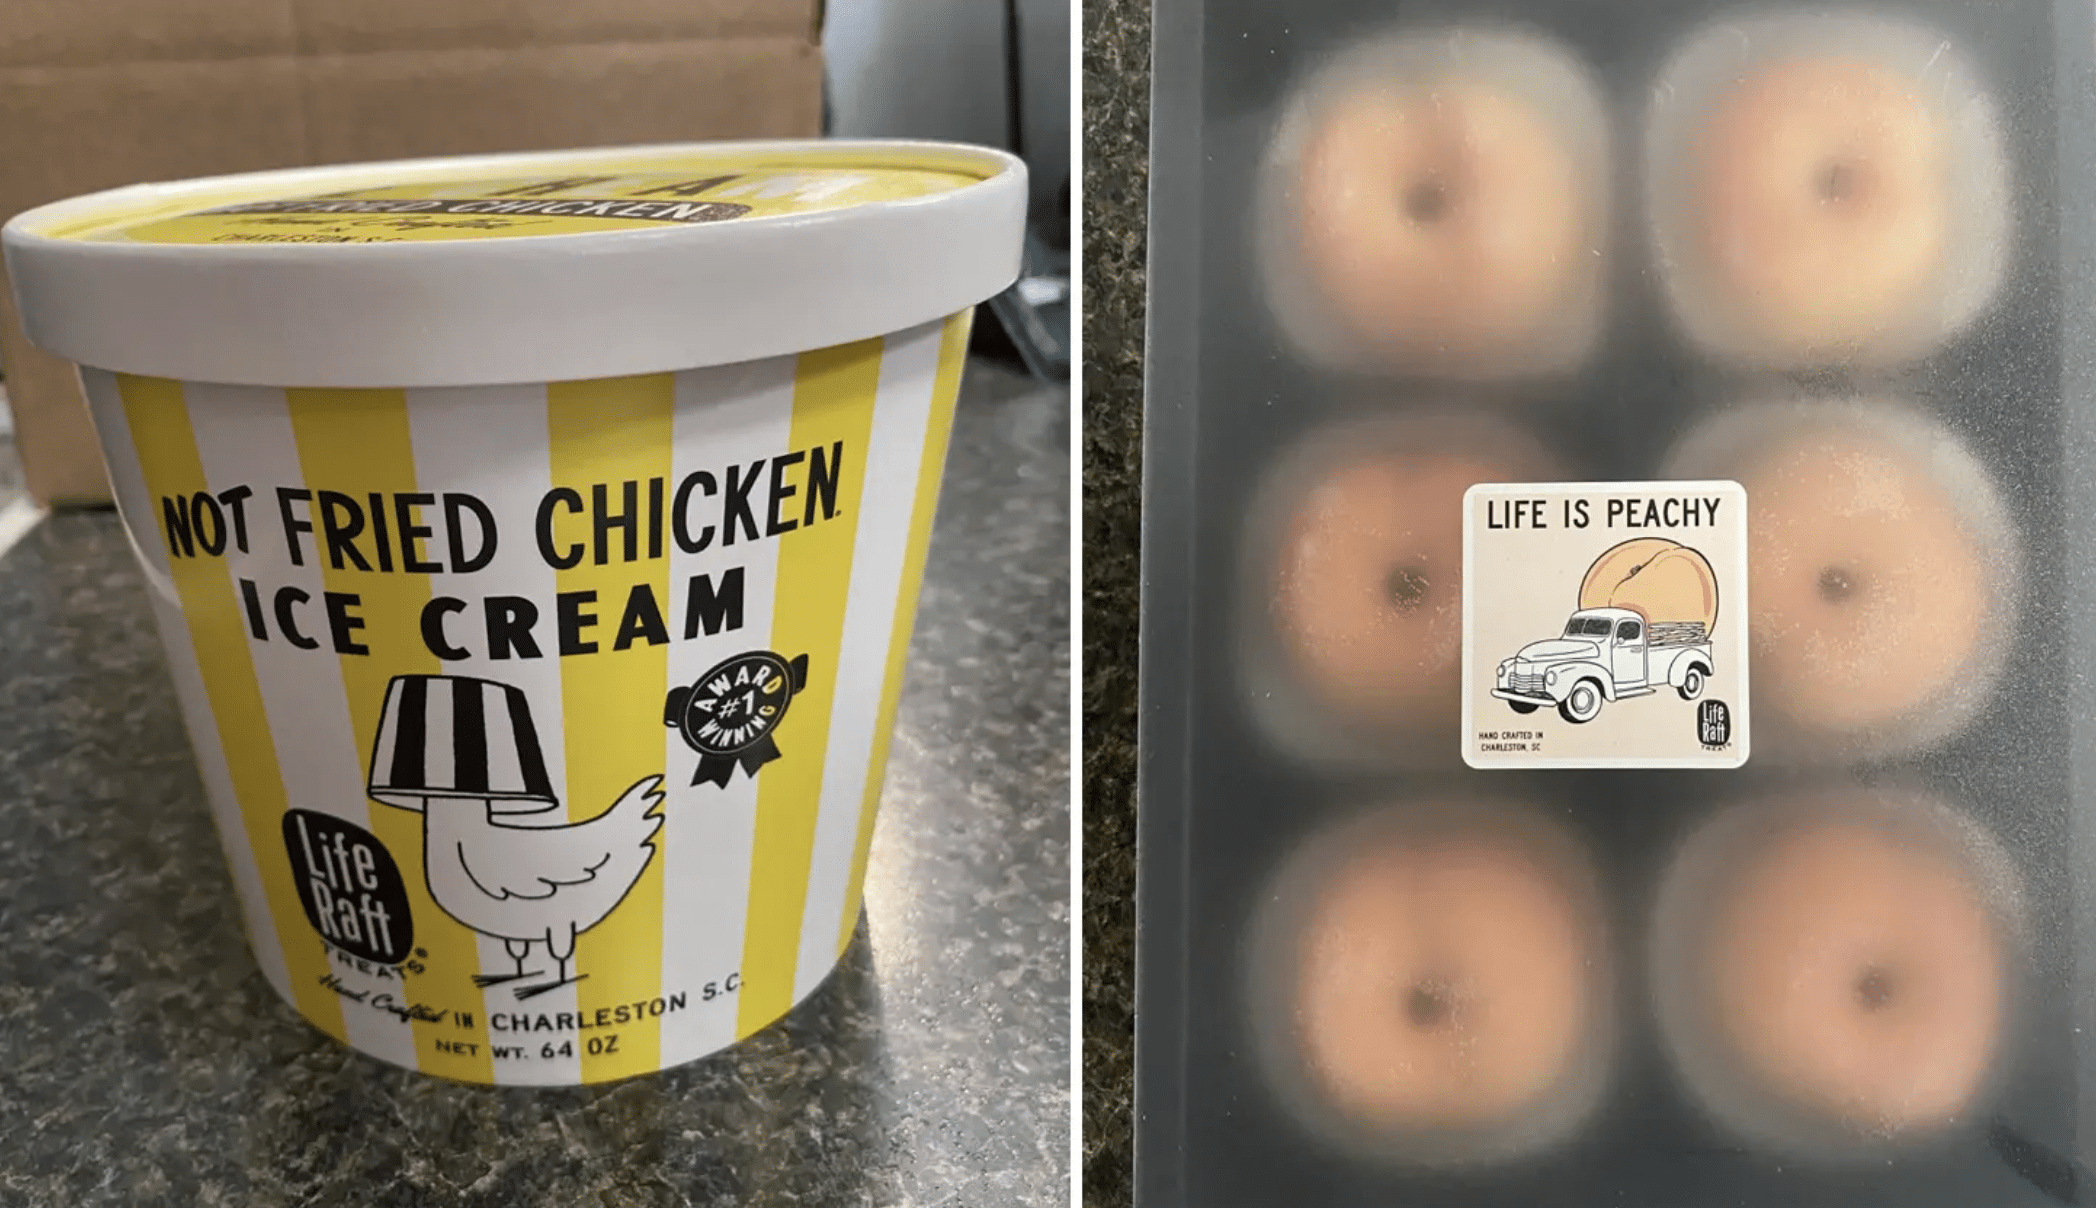 Not Fried Chicken Ice Cream Recalled in Texas